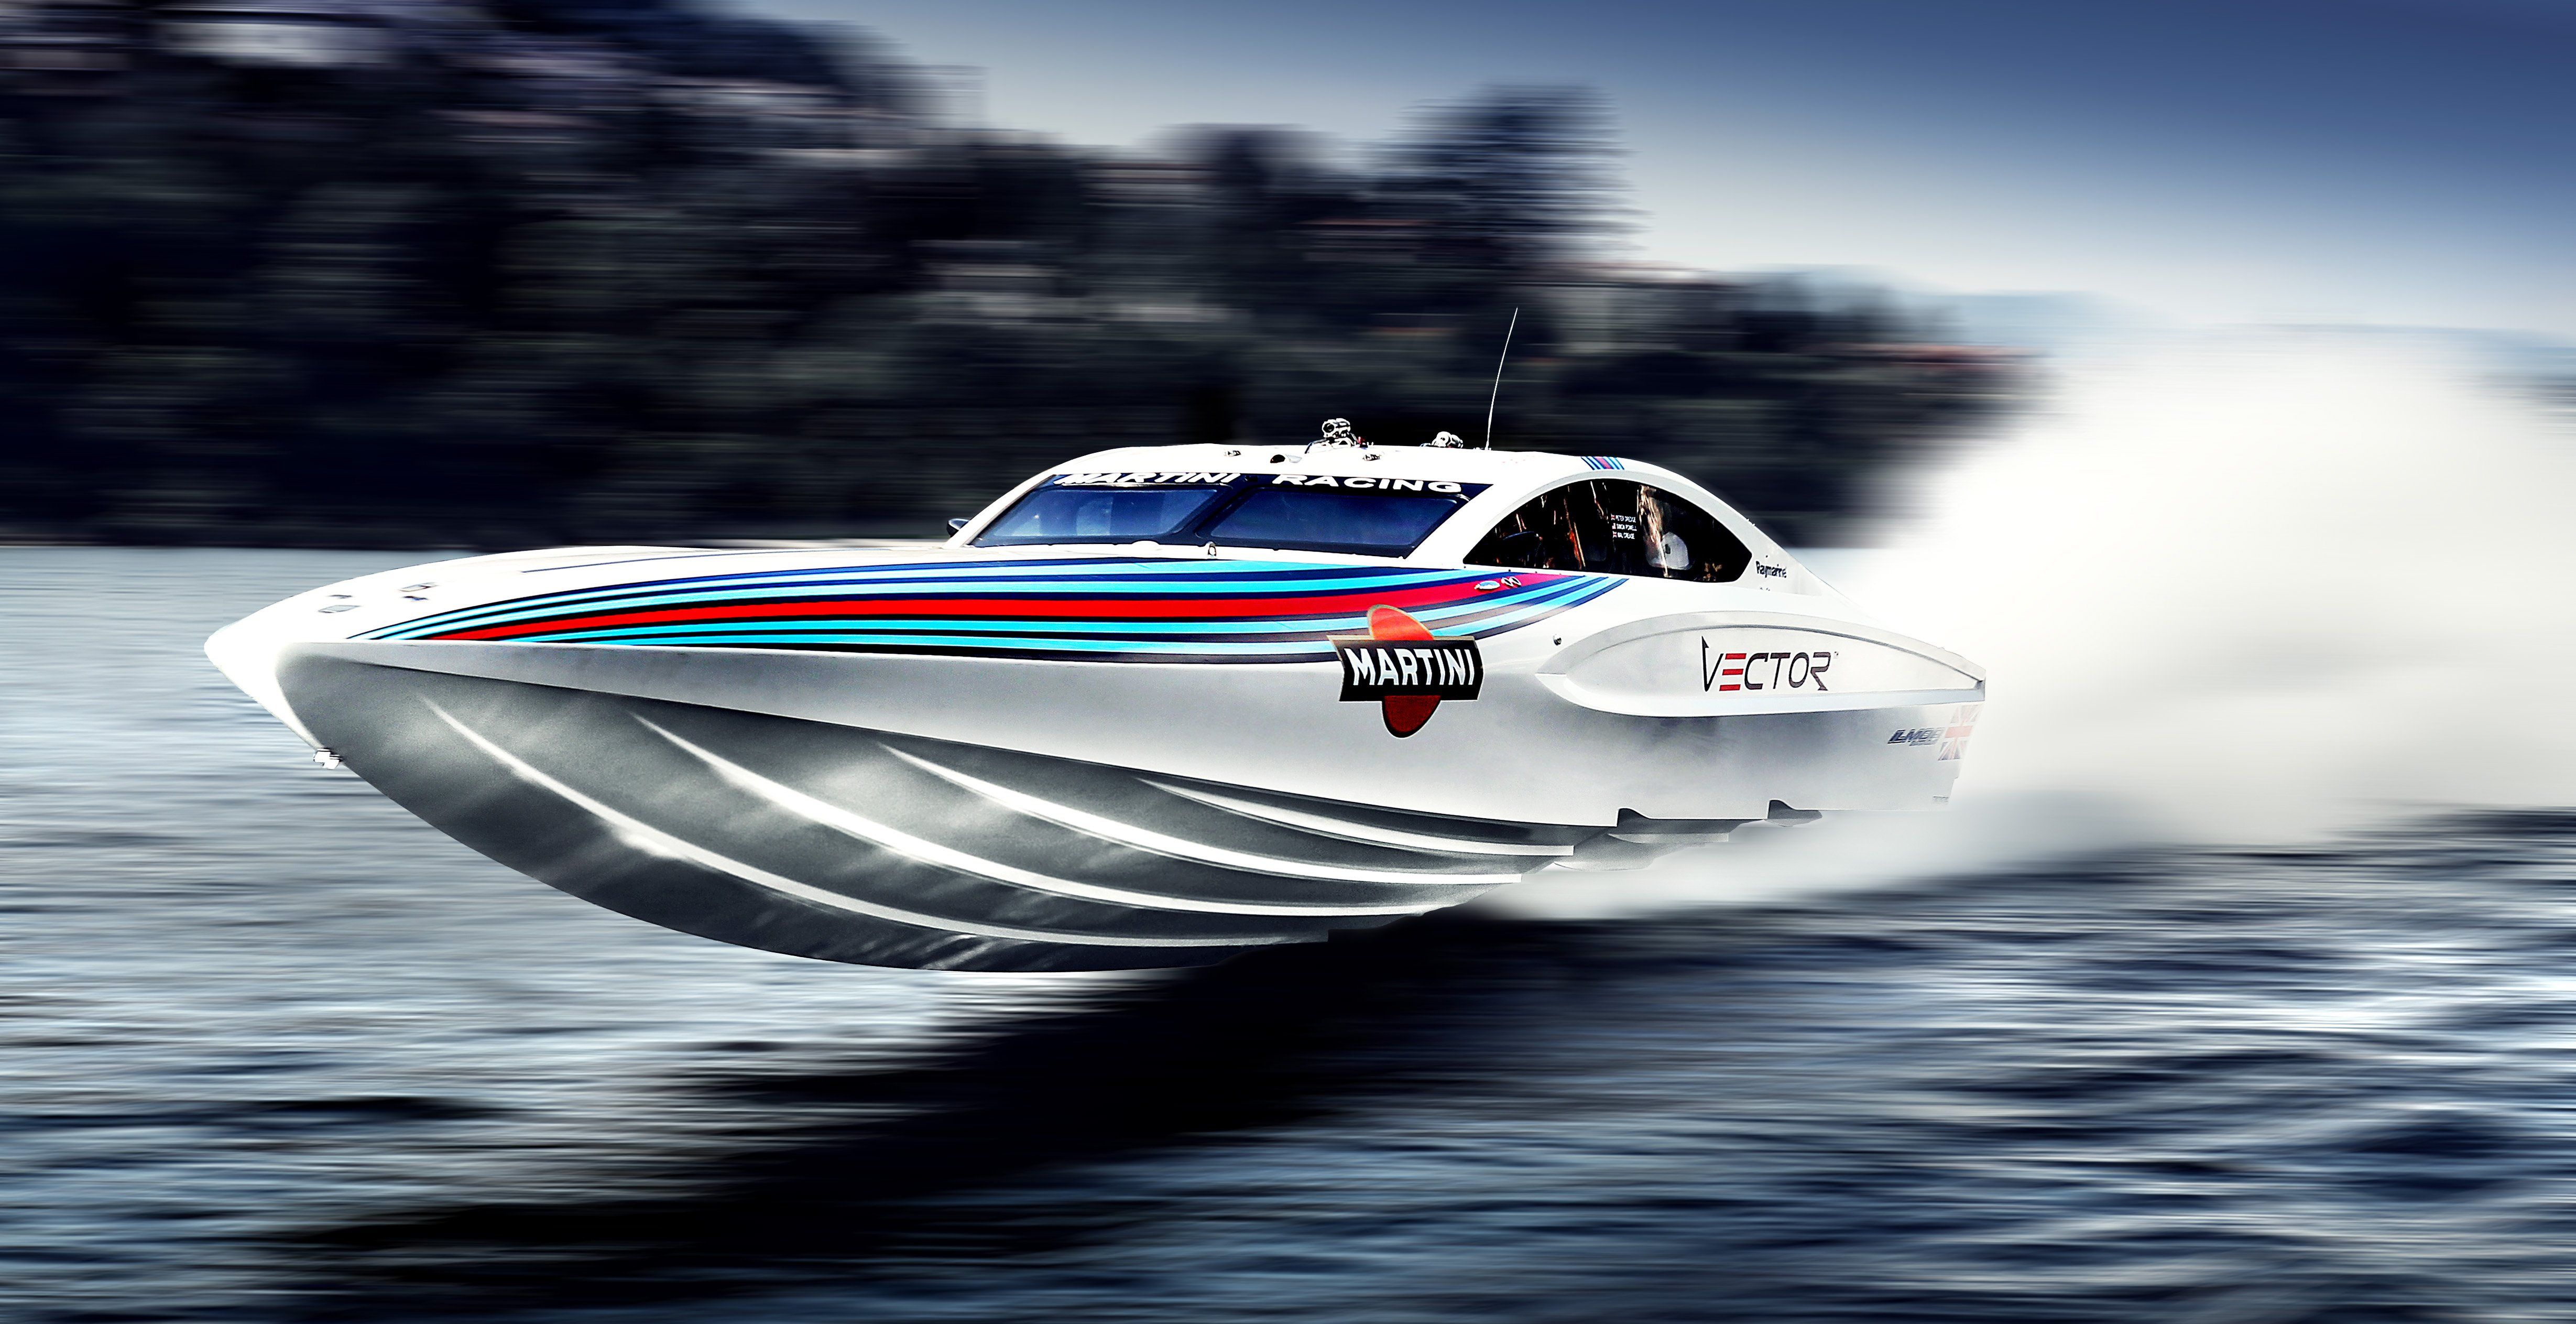 POWERBOAT boat ship race racing superboat custom cigarette